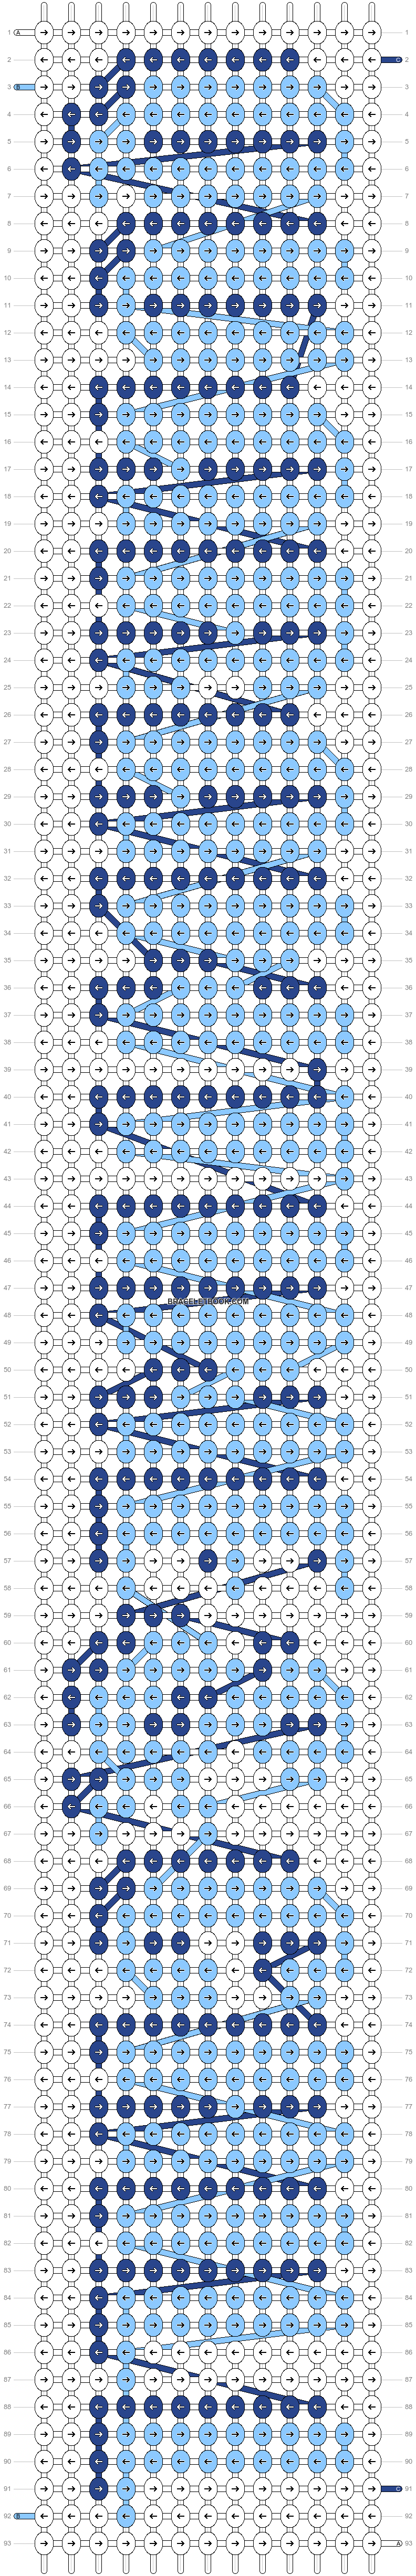 Alpha pattern #39006 variation #45897 pattern